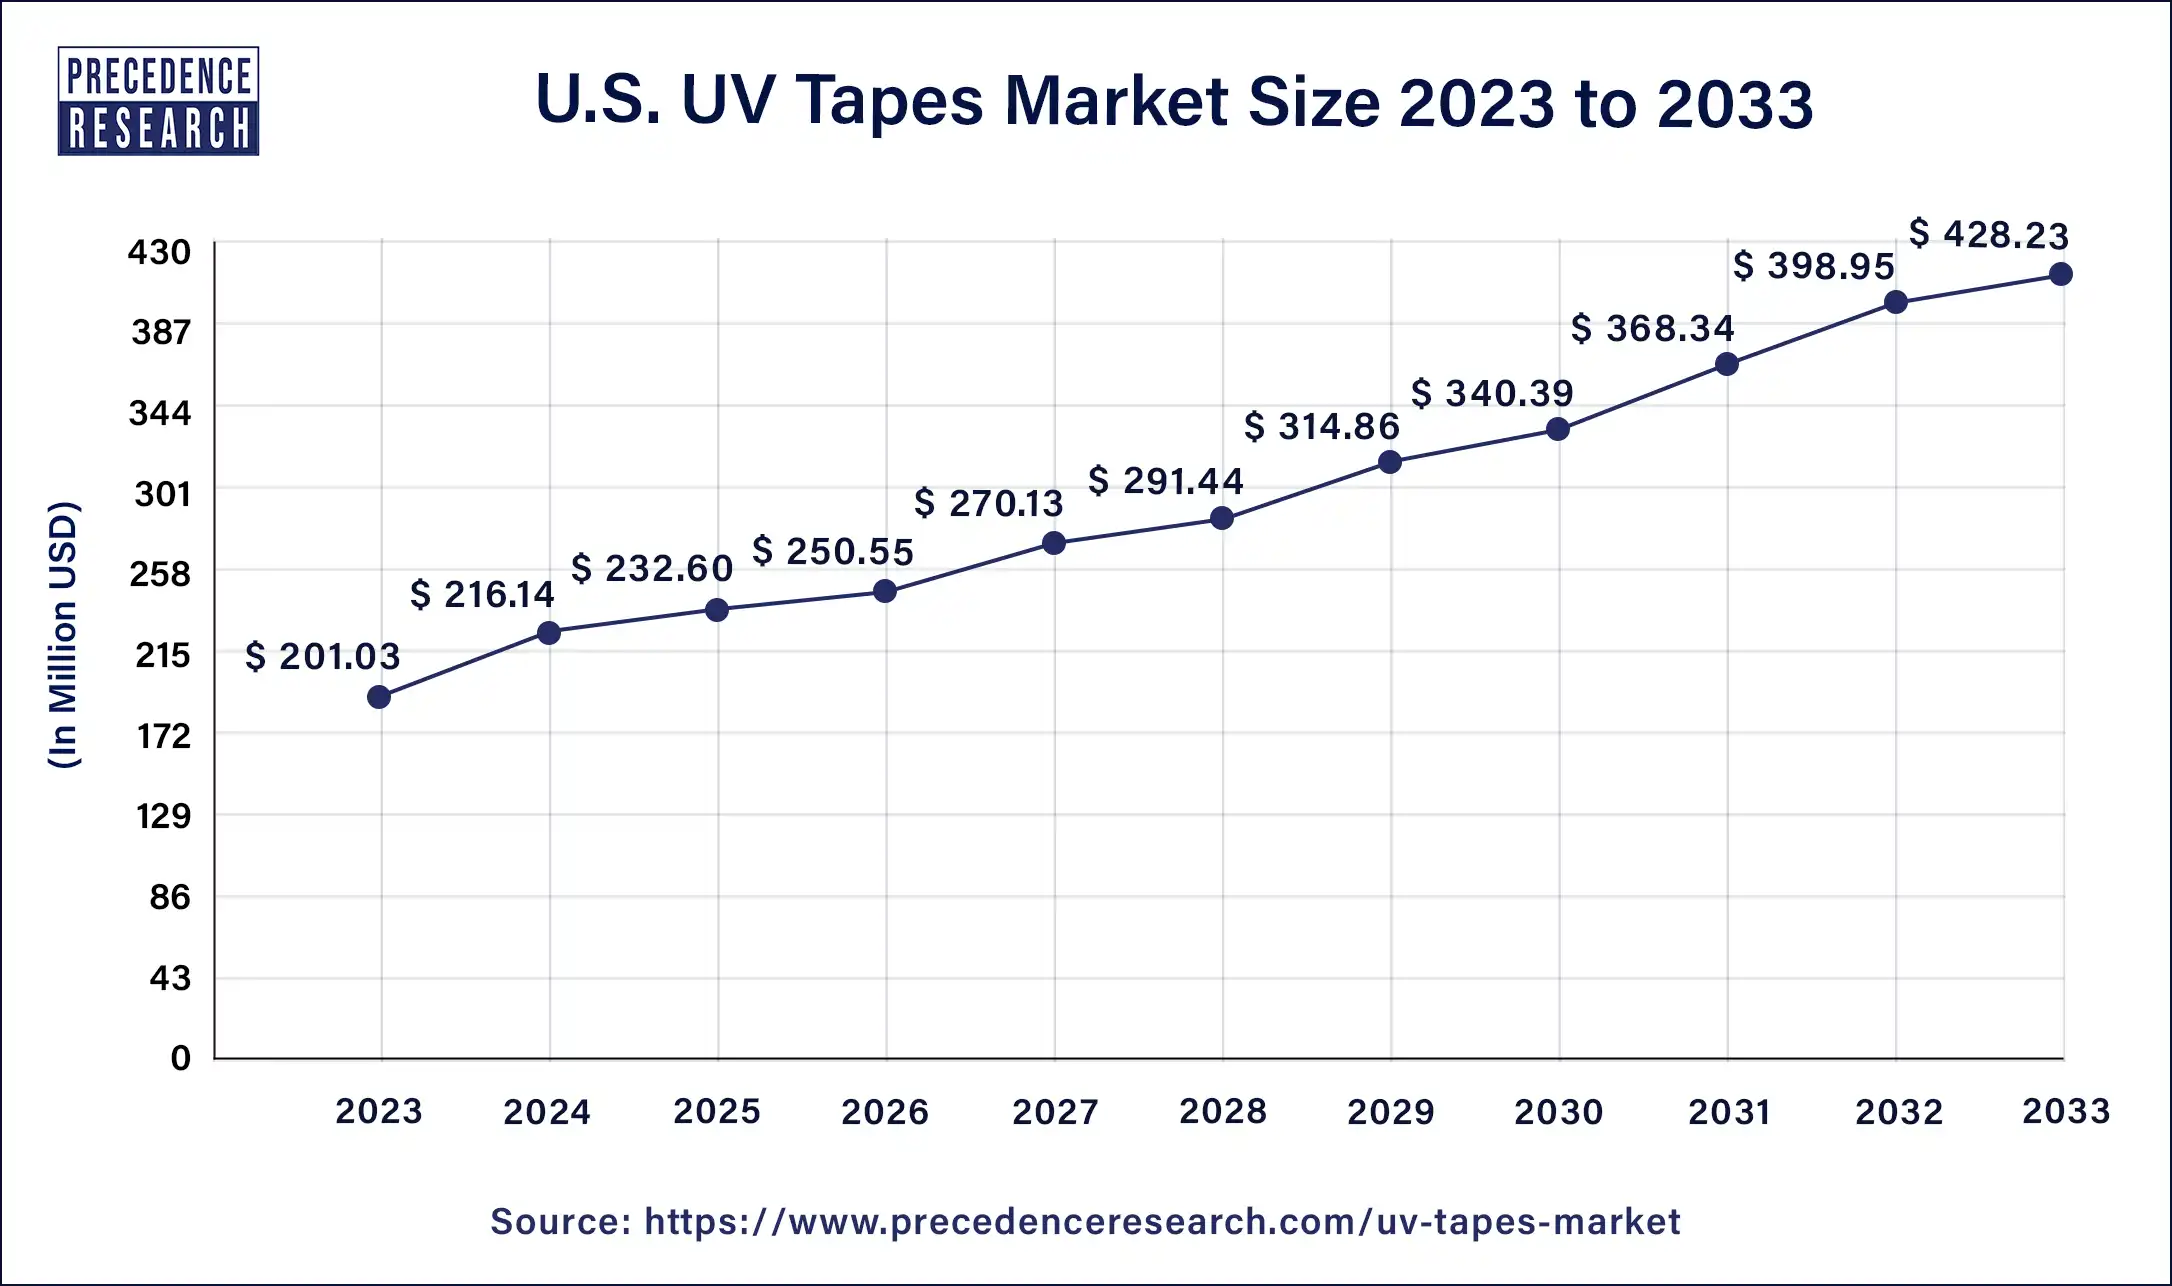 U.S. UV Tapes Market Size 2024 to 2033